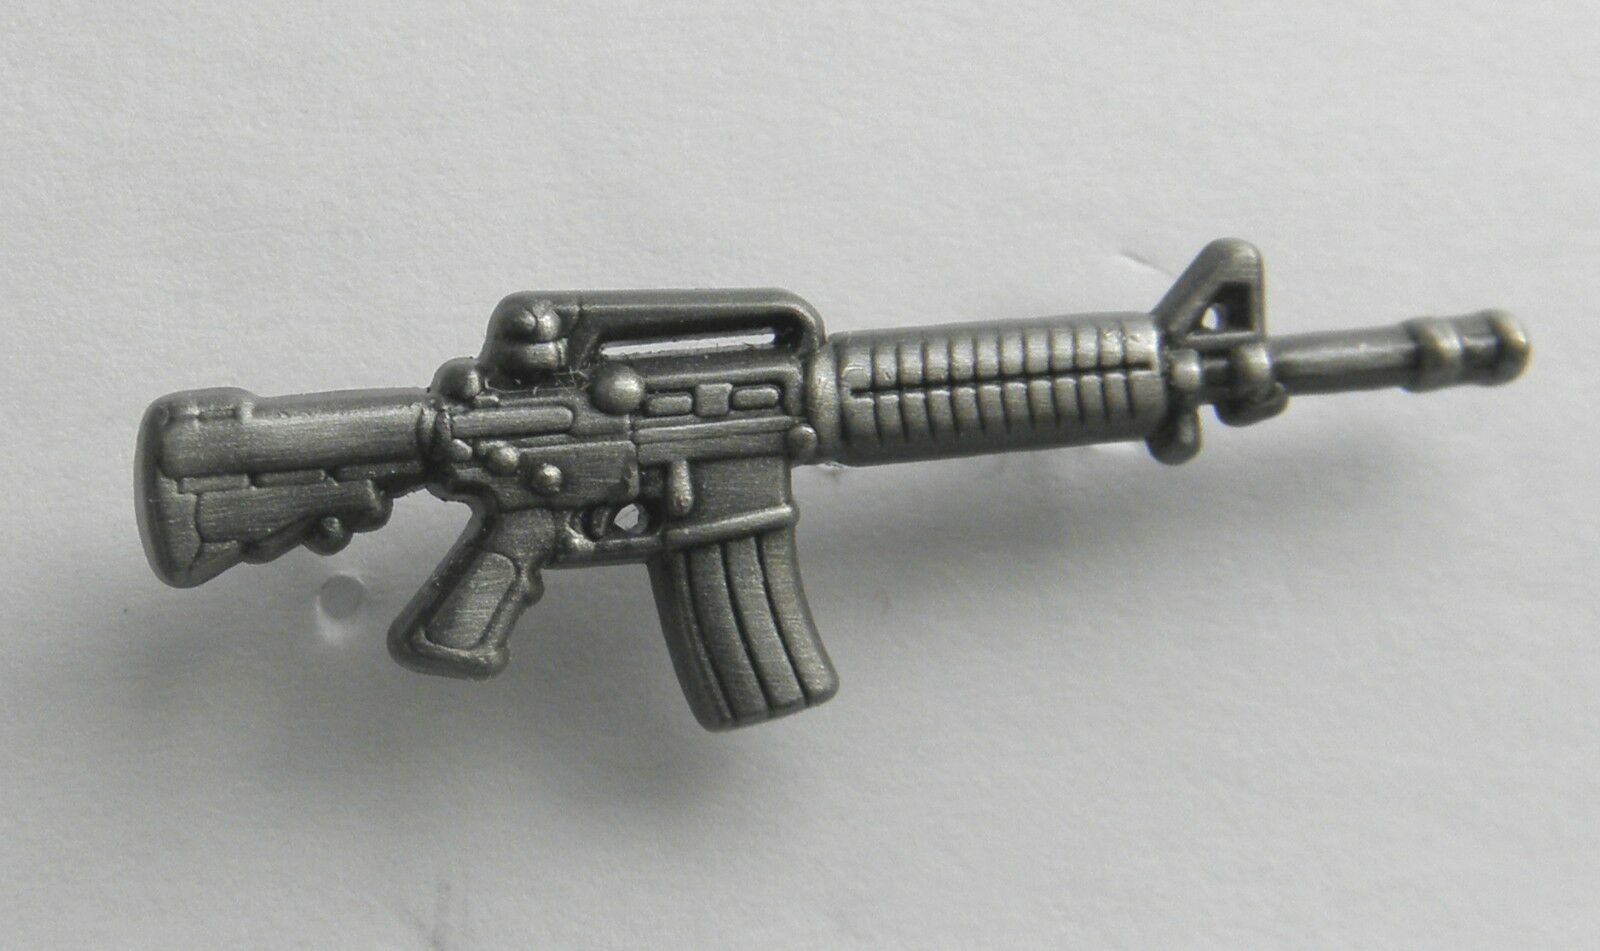 M16/AR-15 Military/Assault Rifle Lapel Pin 5.56 mm caliber 